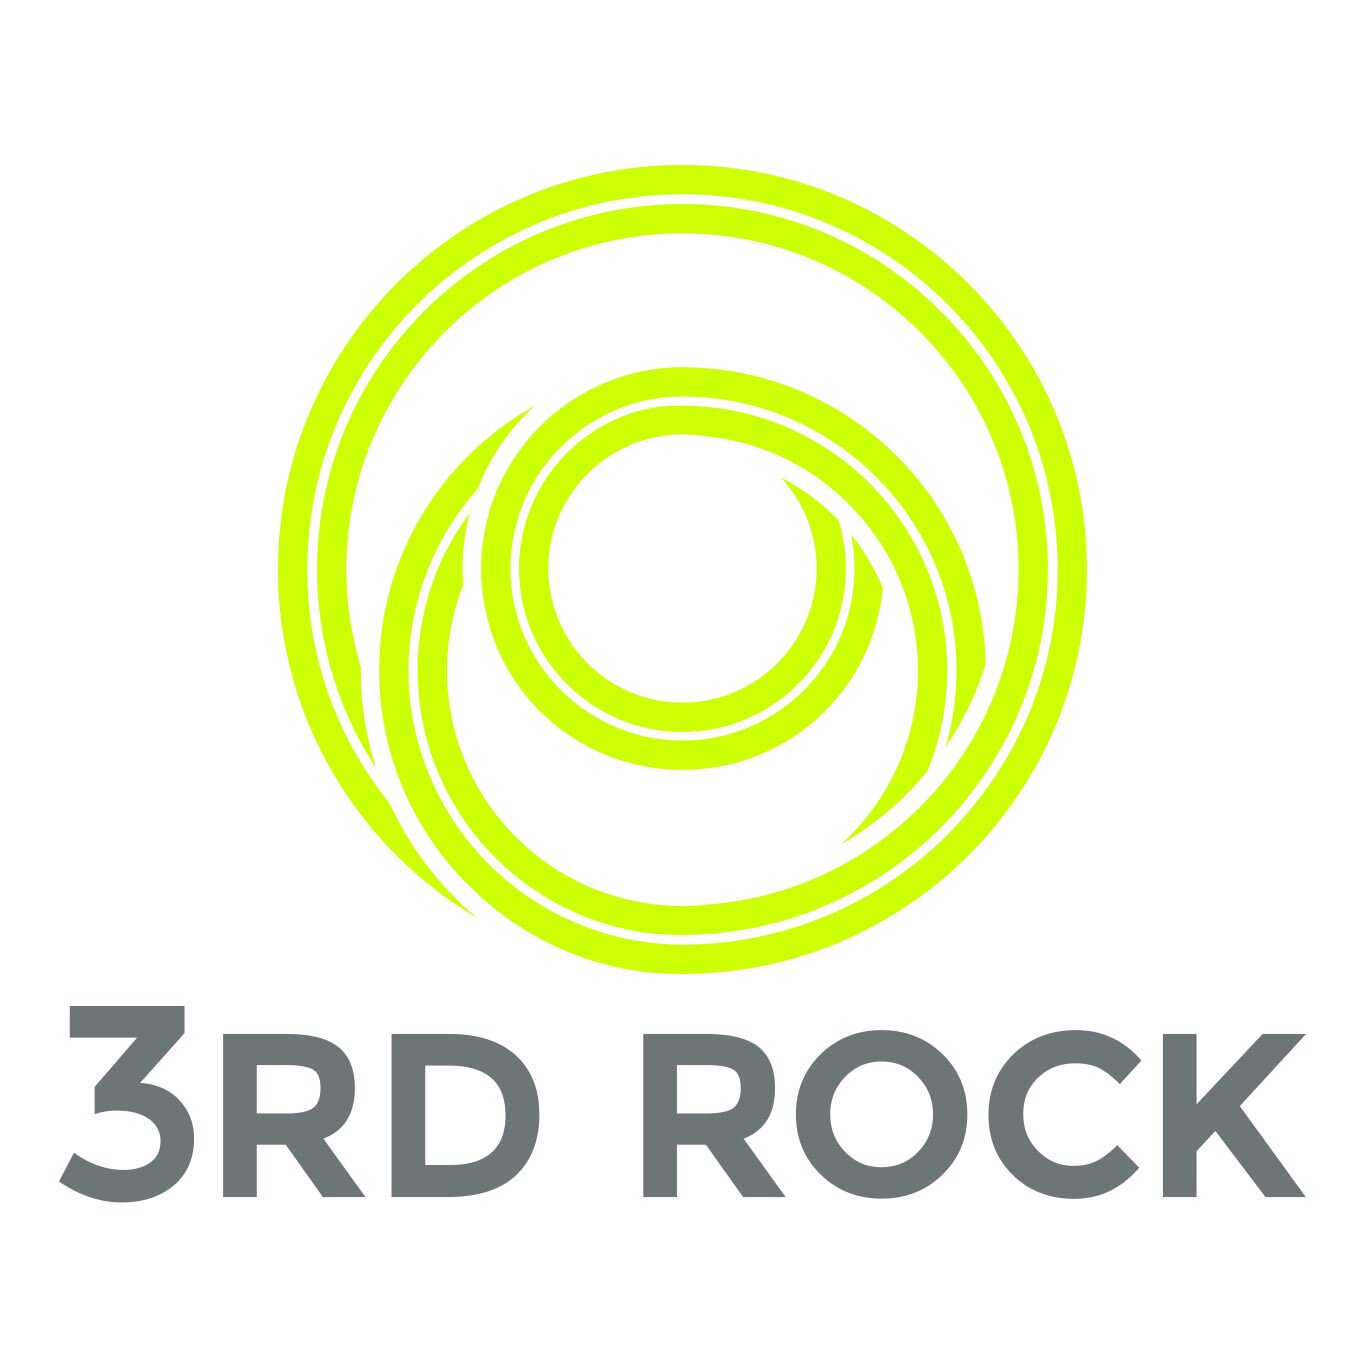 3RD ROCK Logo SQUARE - Jessica Mor.jpg